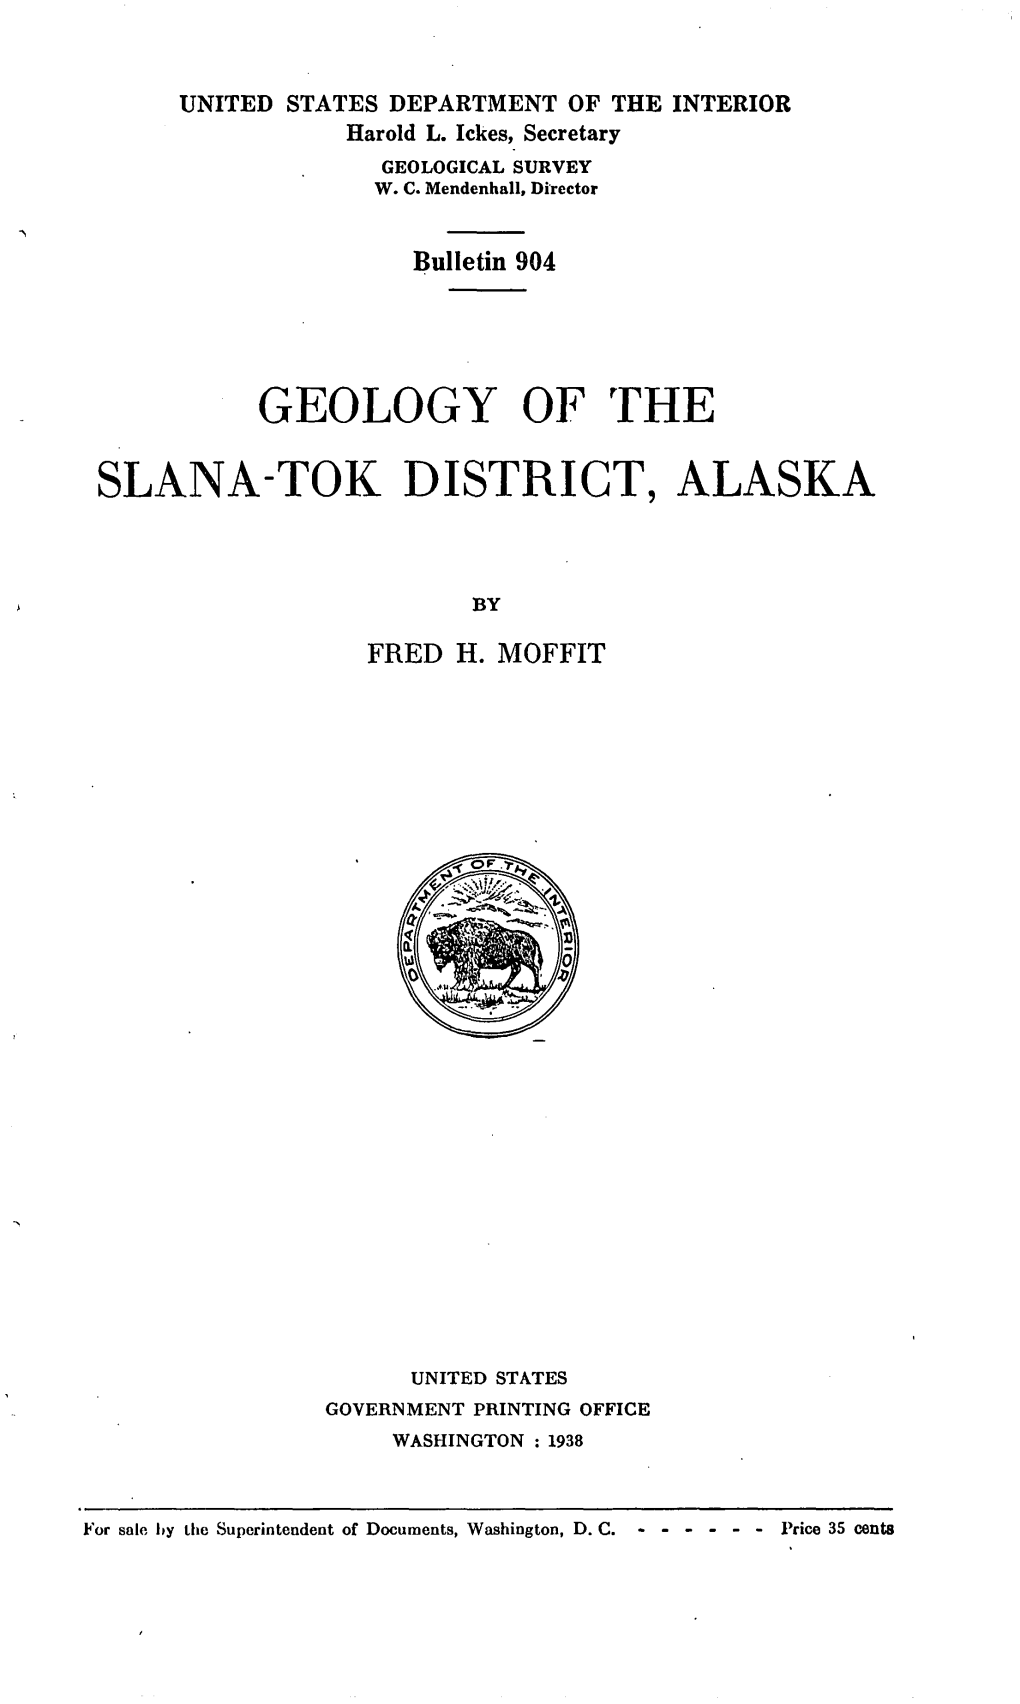 Geology of the Slana-Tok District, Alaska